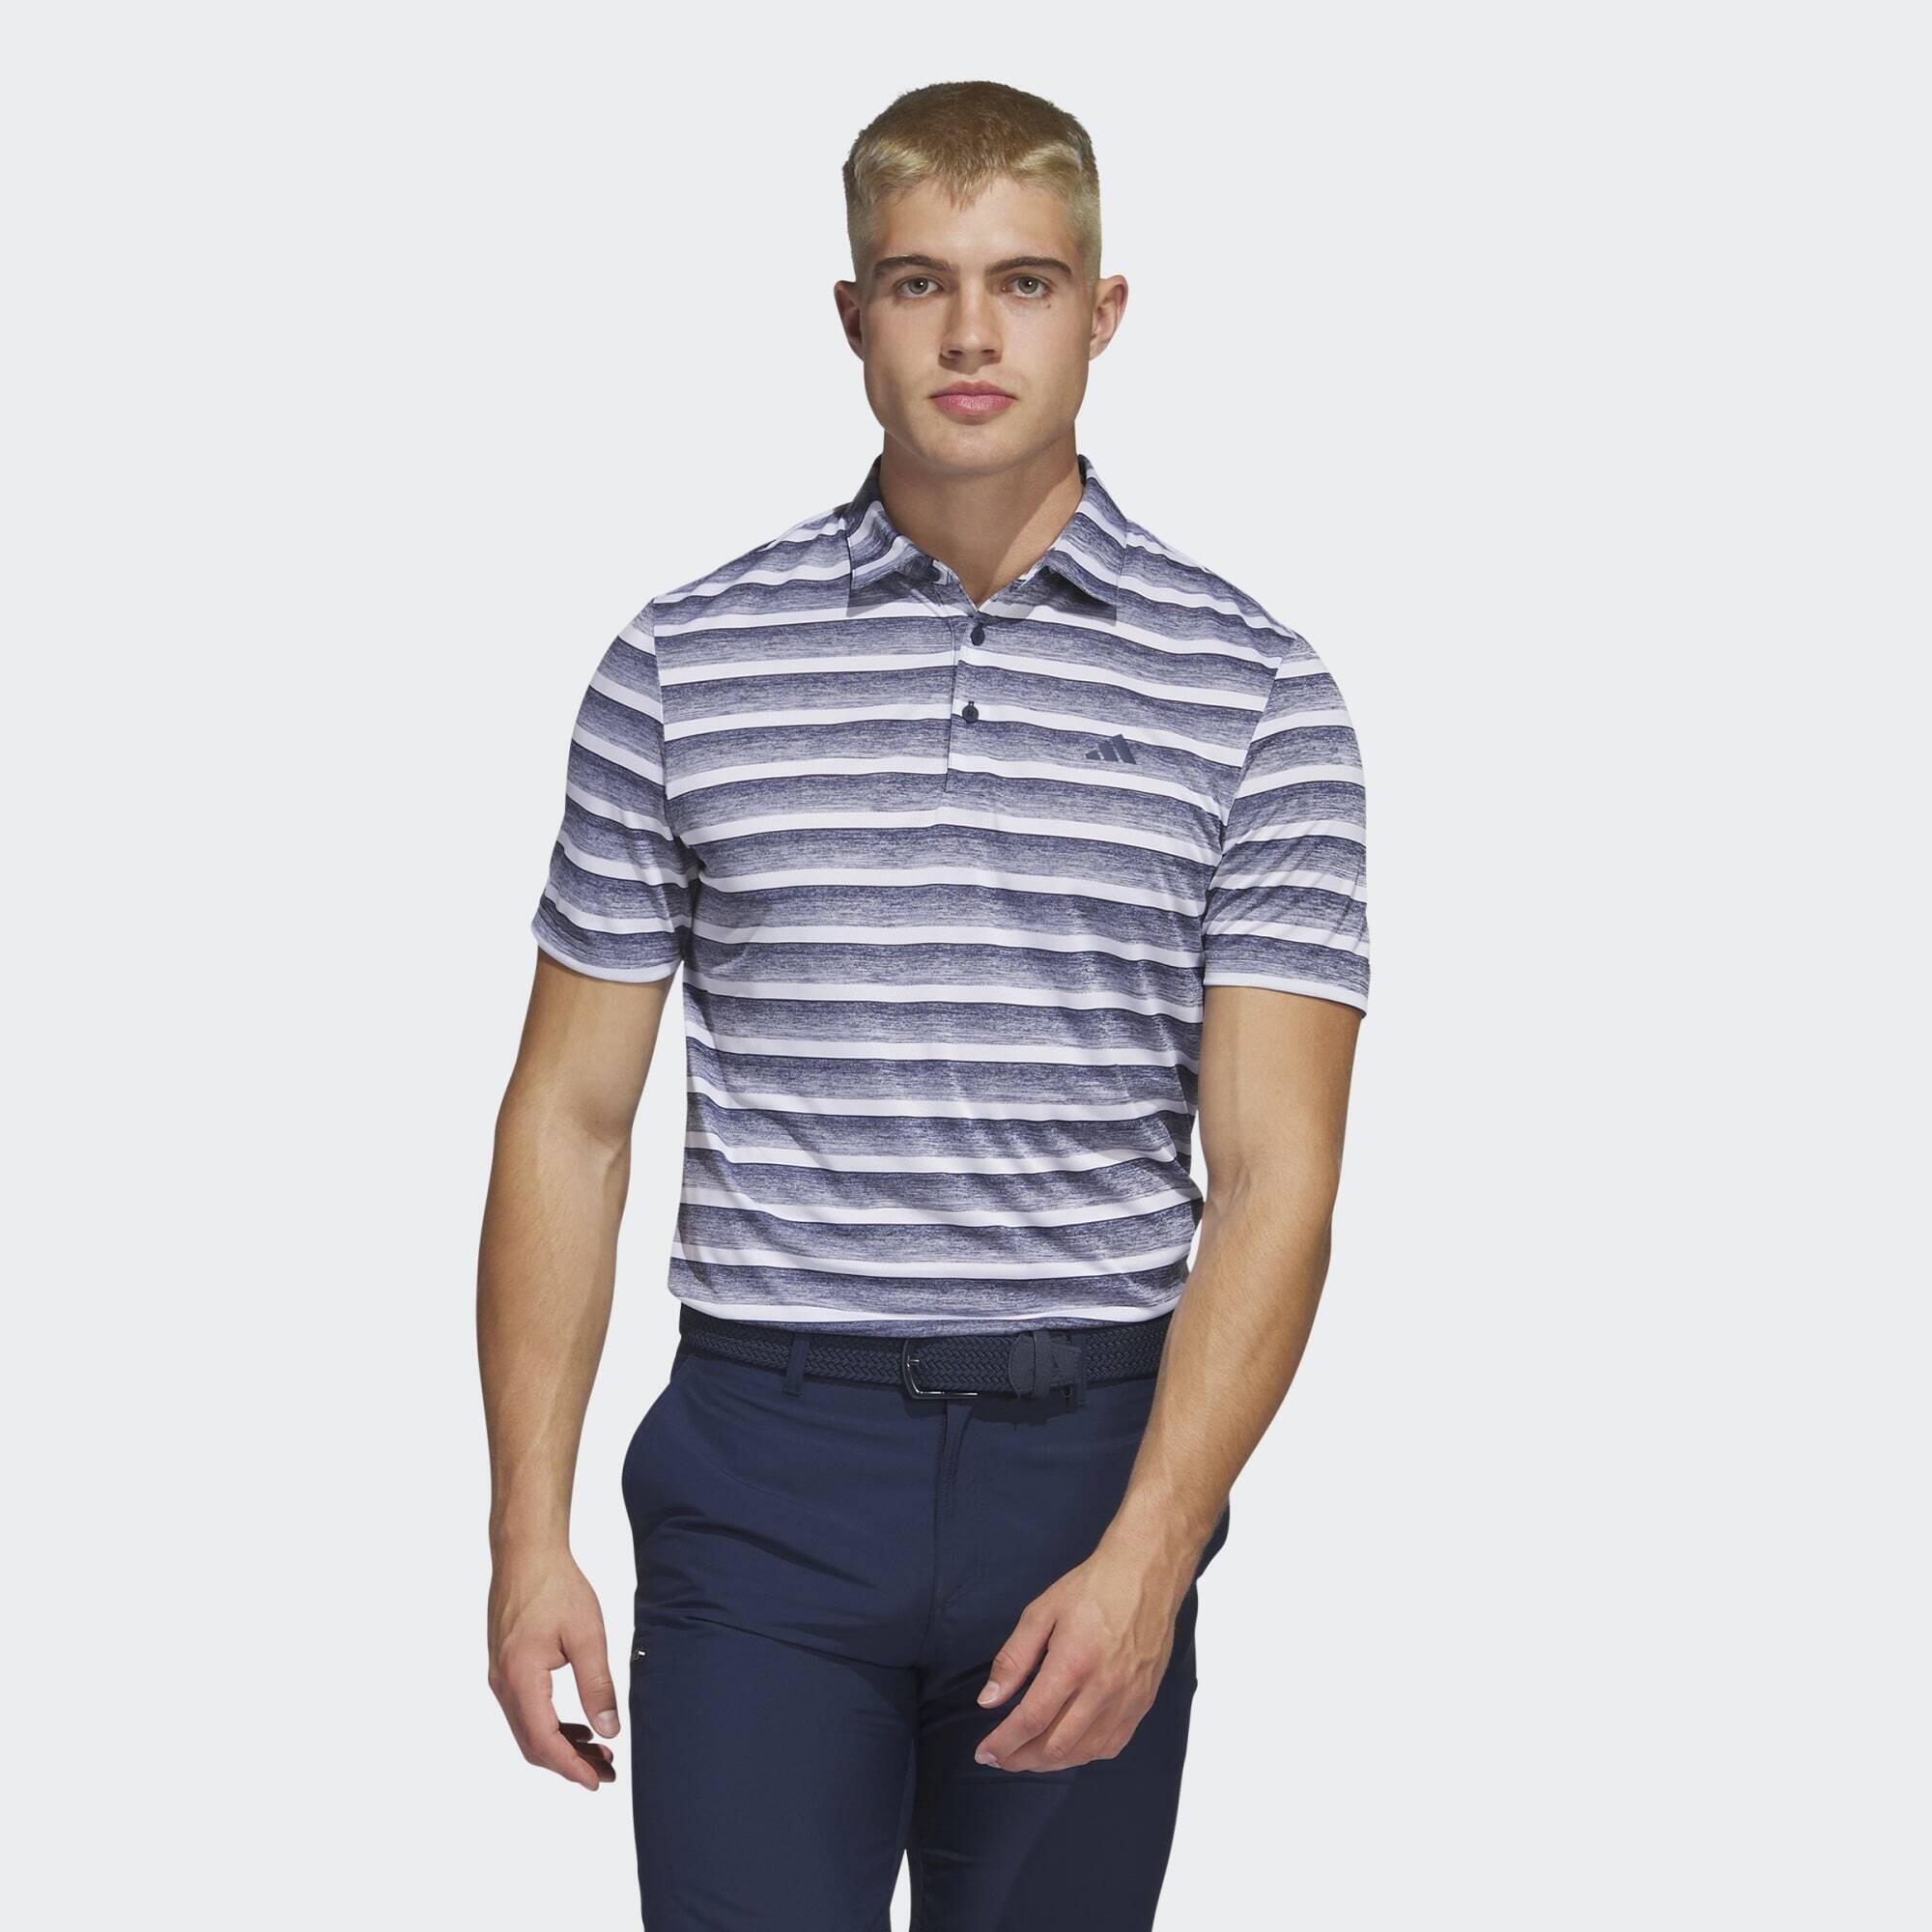 ADIDAS Two-Color Striped Golf Polo Shirt